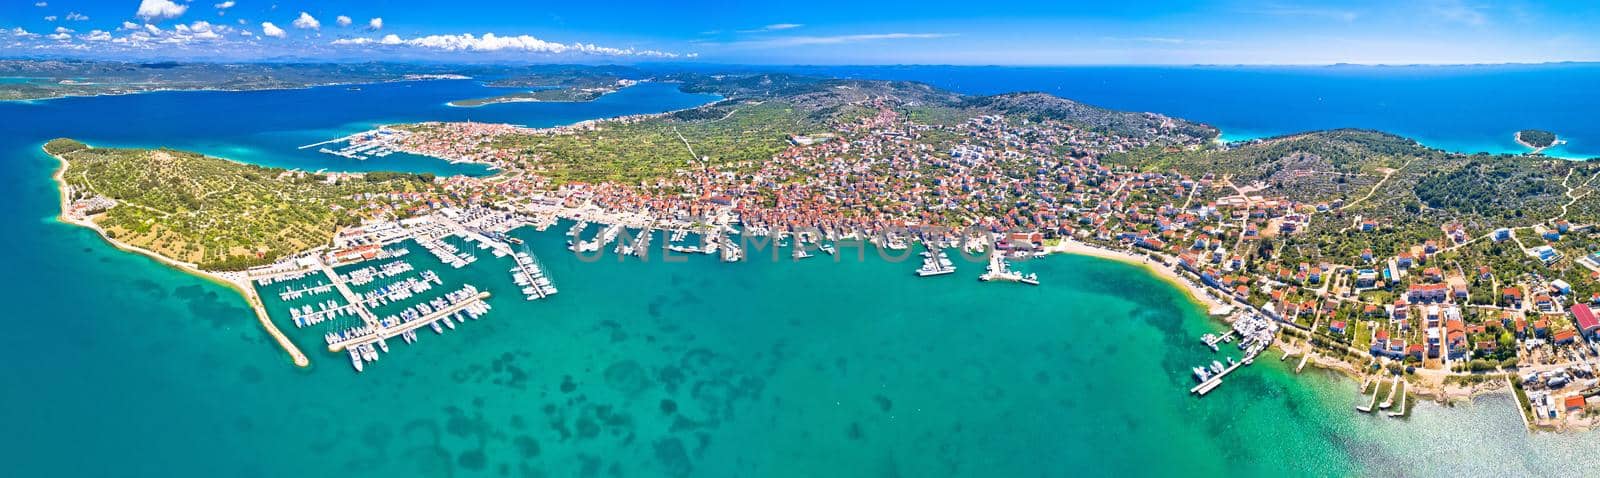 Island of Murter archipelago aerial panoramic view, Dalmatia region of Croatia